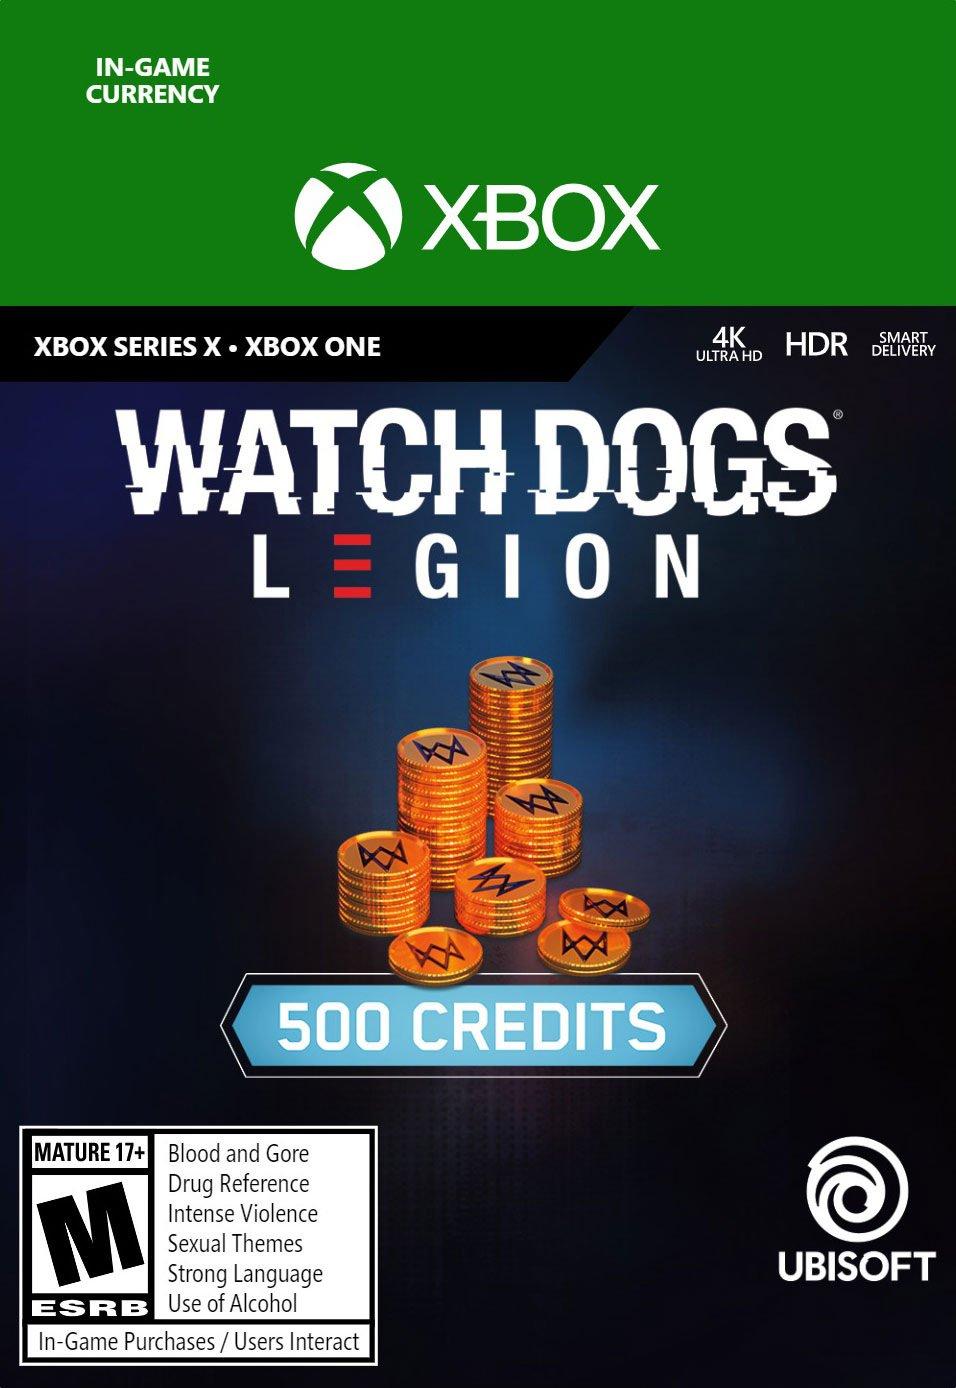 Watch Dogs Legion ESRB Description, contains some new info & a